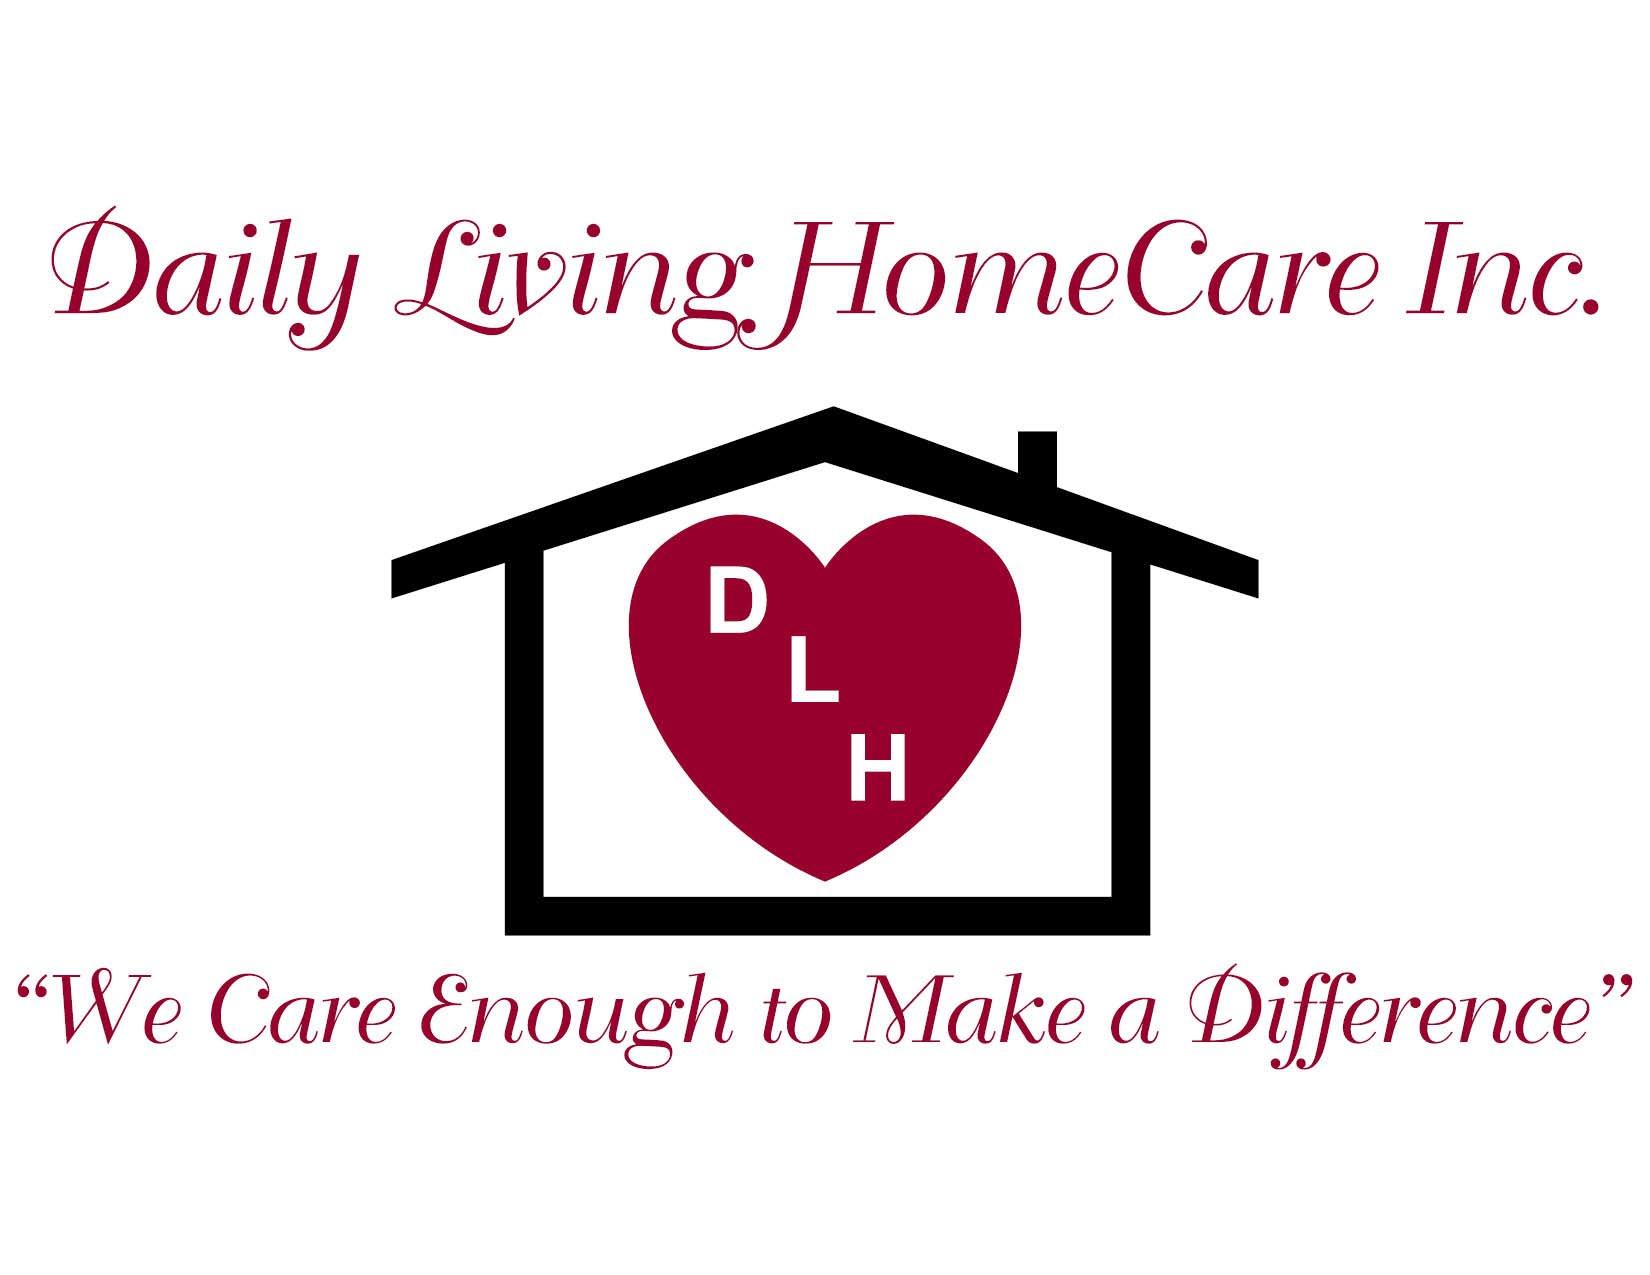 Daily Living HomeCare, Inc image